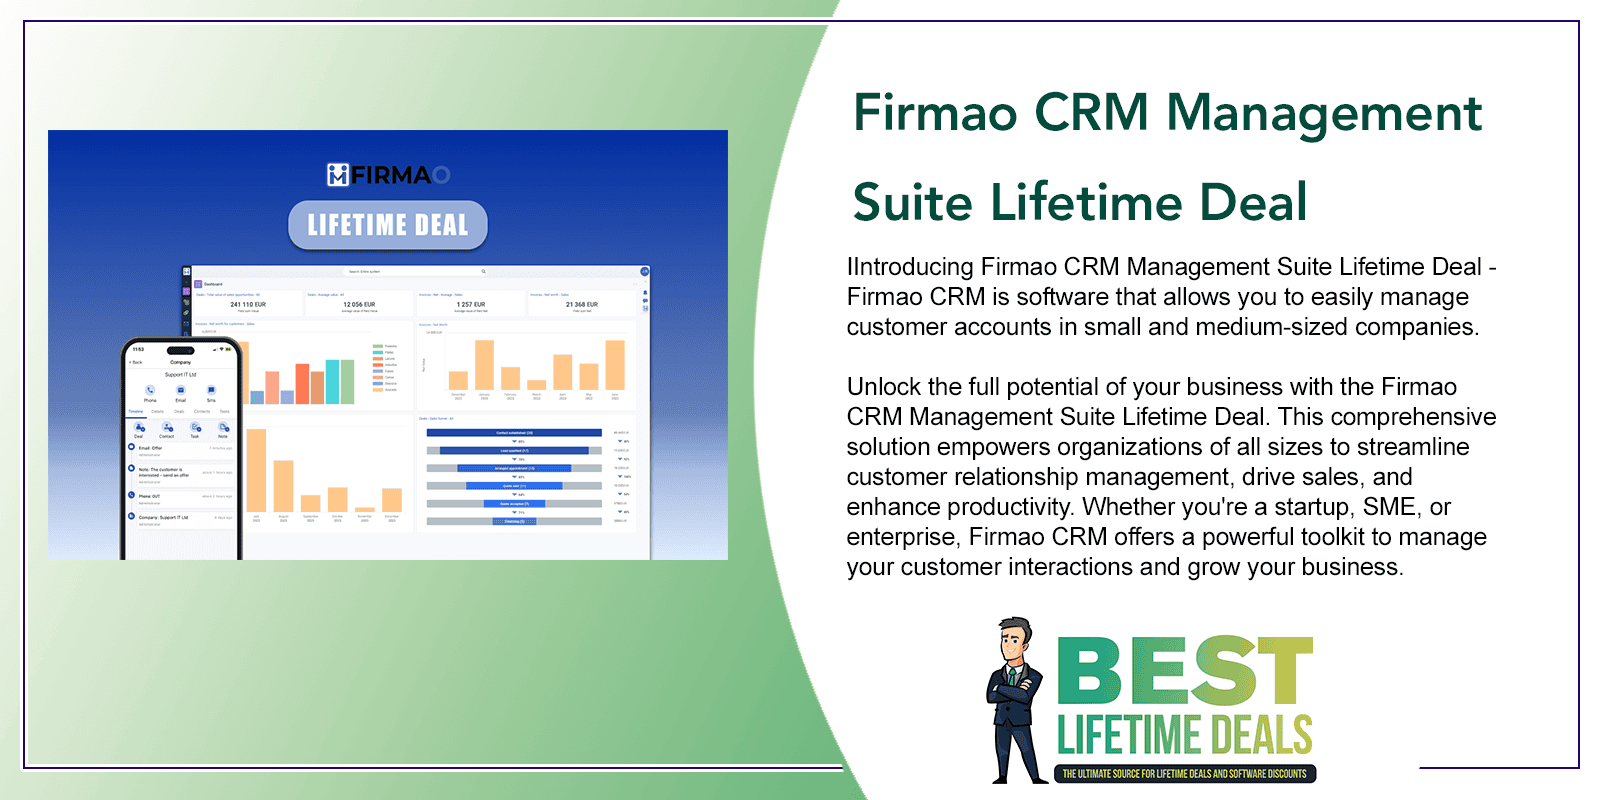 Firmao CRM Management Suite Lifetime Deal Featured Image